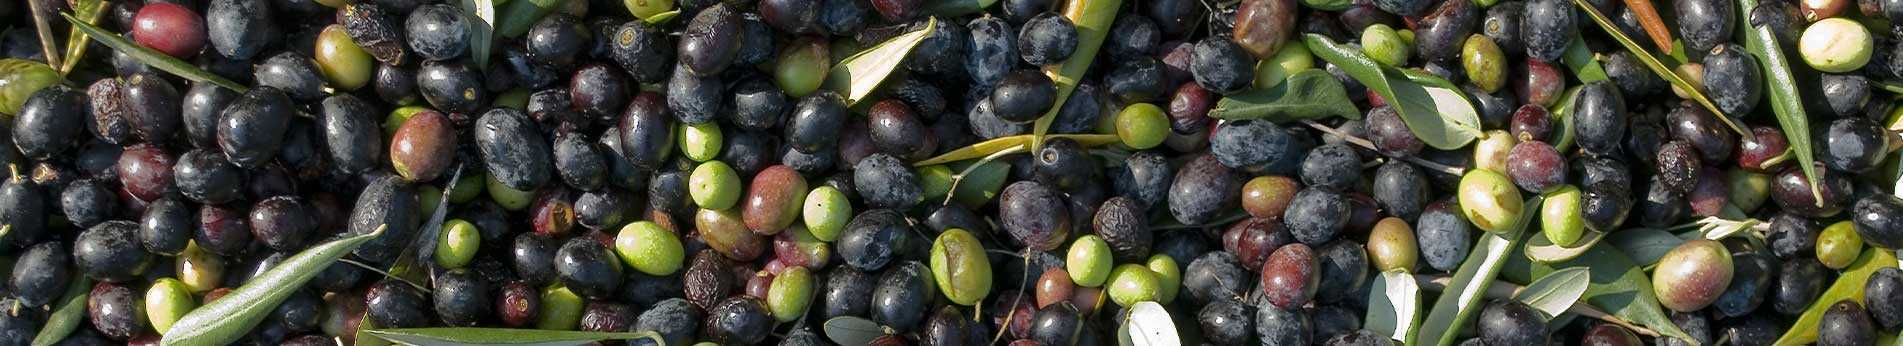 Ramassage et cueillette des olives